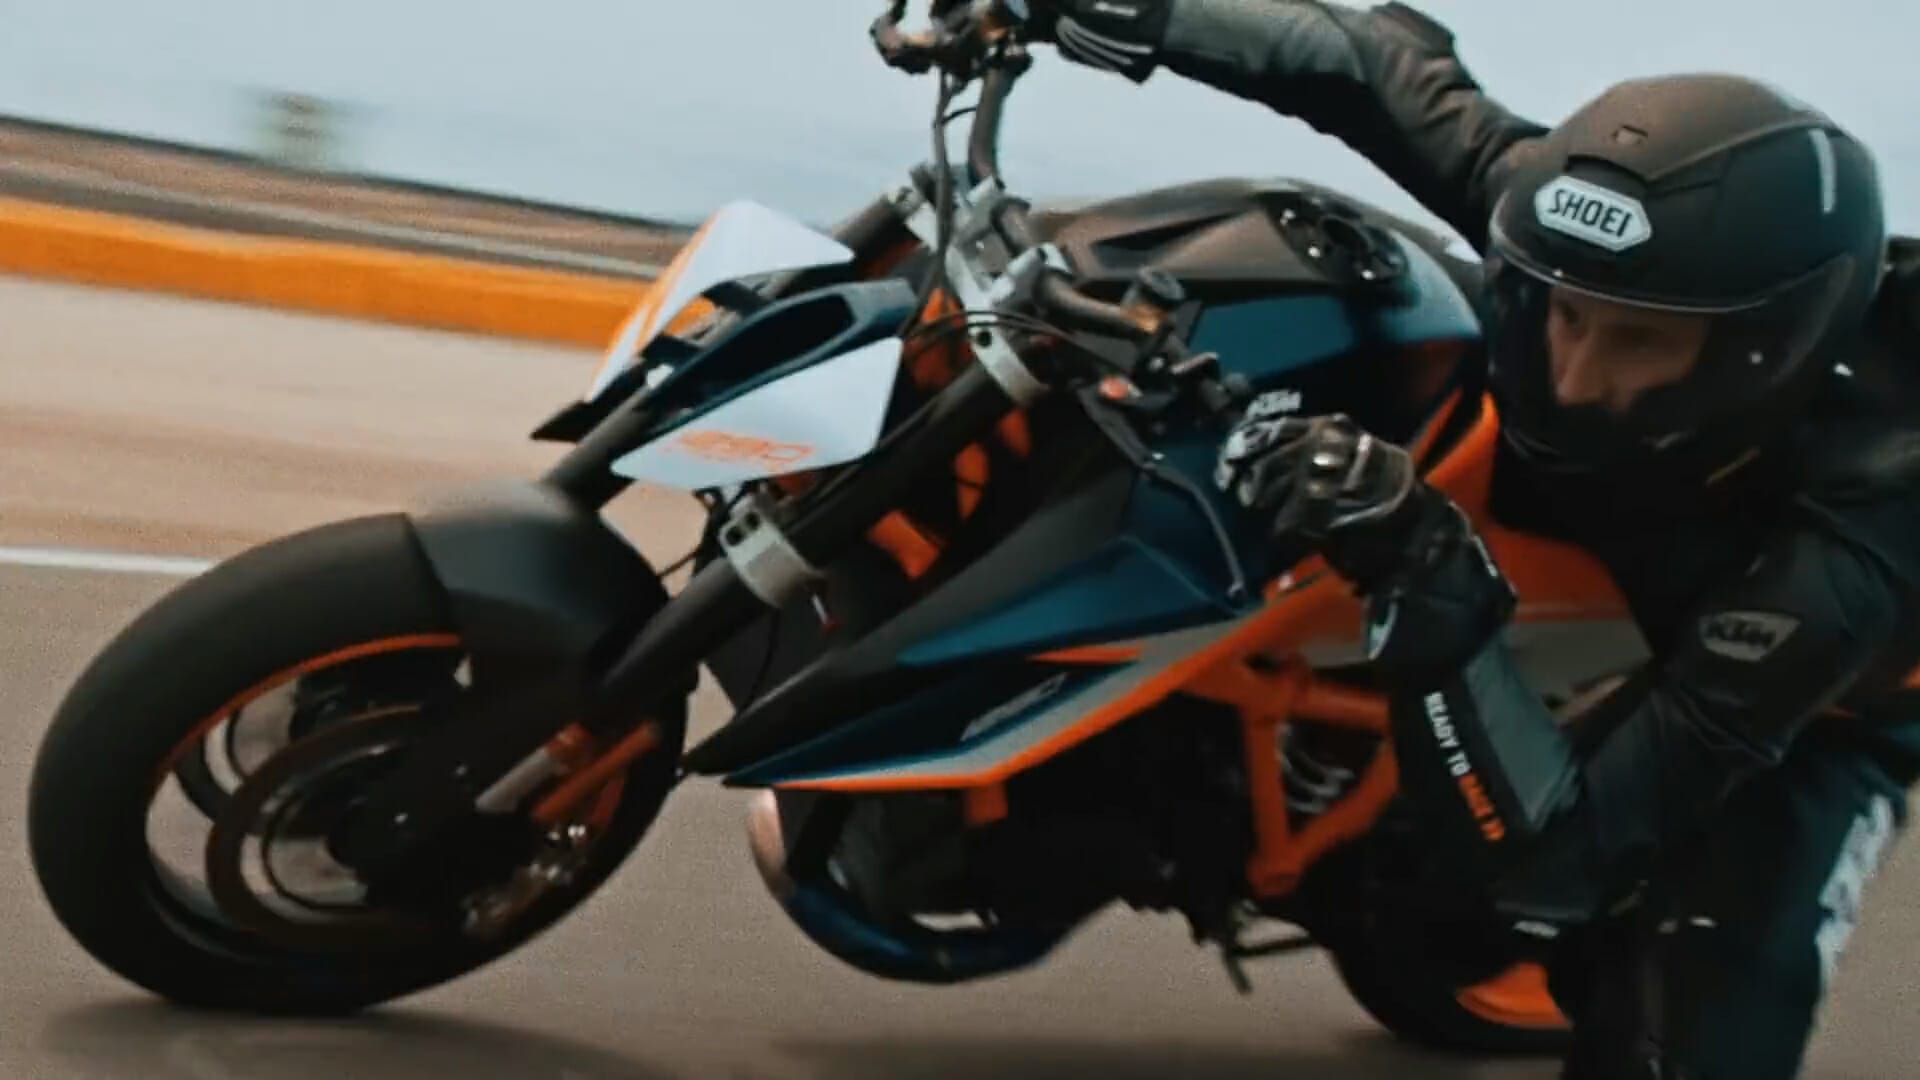 #KTM 1290 Super #Duke R – Prototyp - #Motorräder2020
- also in the app Motorcycle News